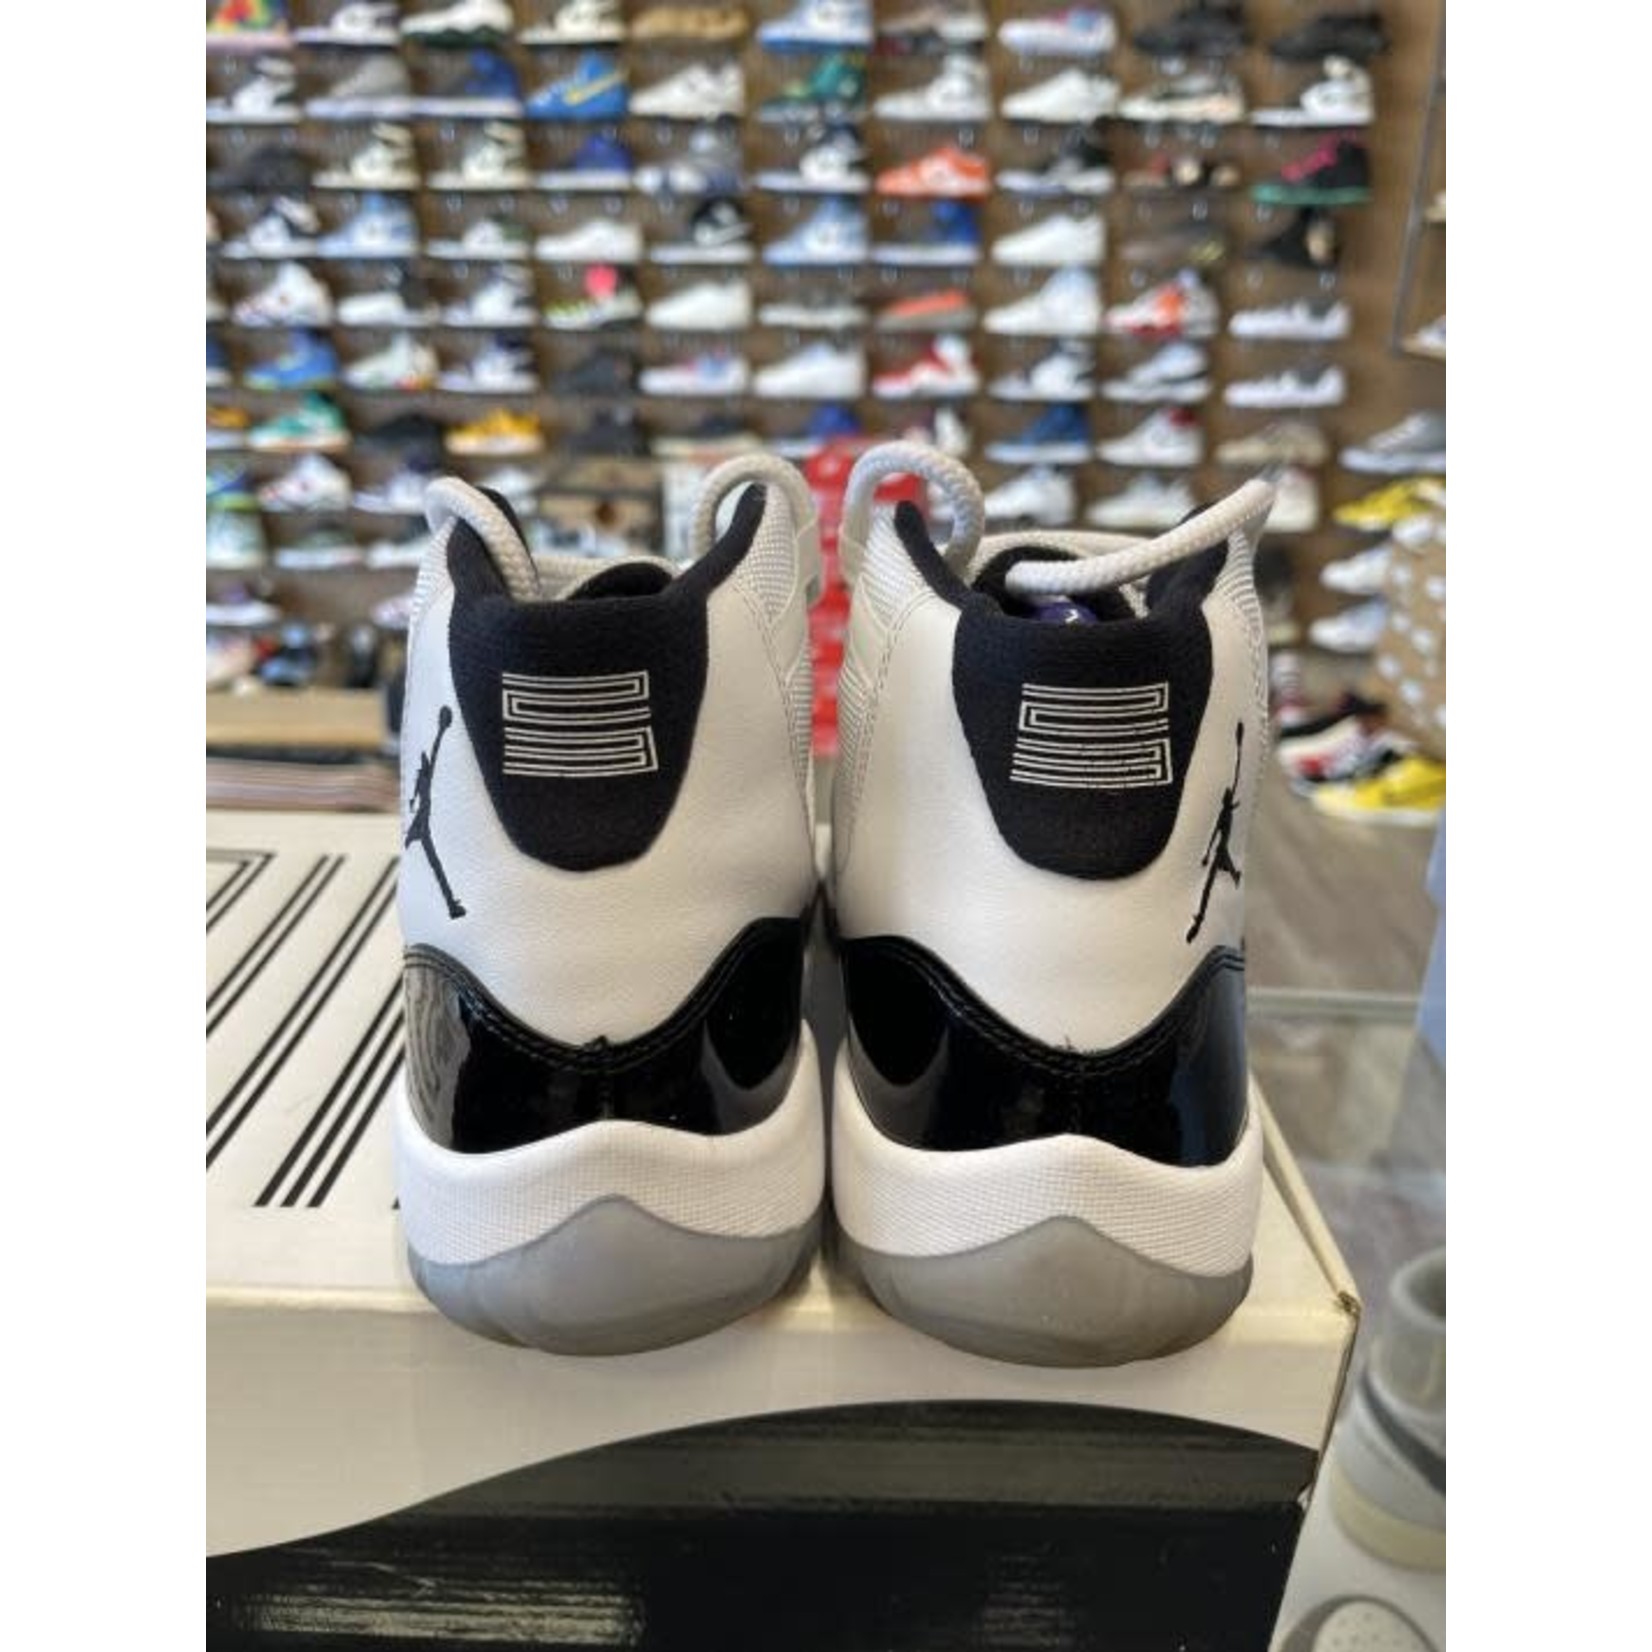 Jordan Jordan 11 Retro Concord (2018) Size 8, PREOWNED SOLE SEPARATION